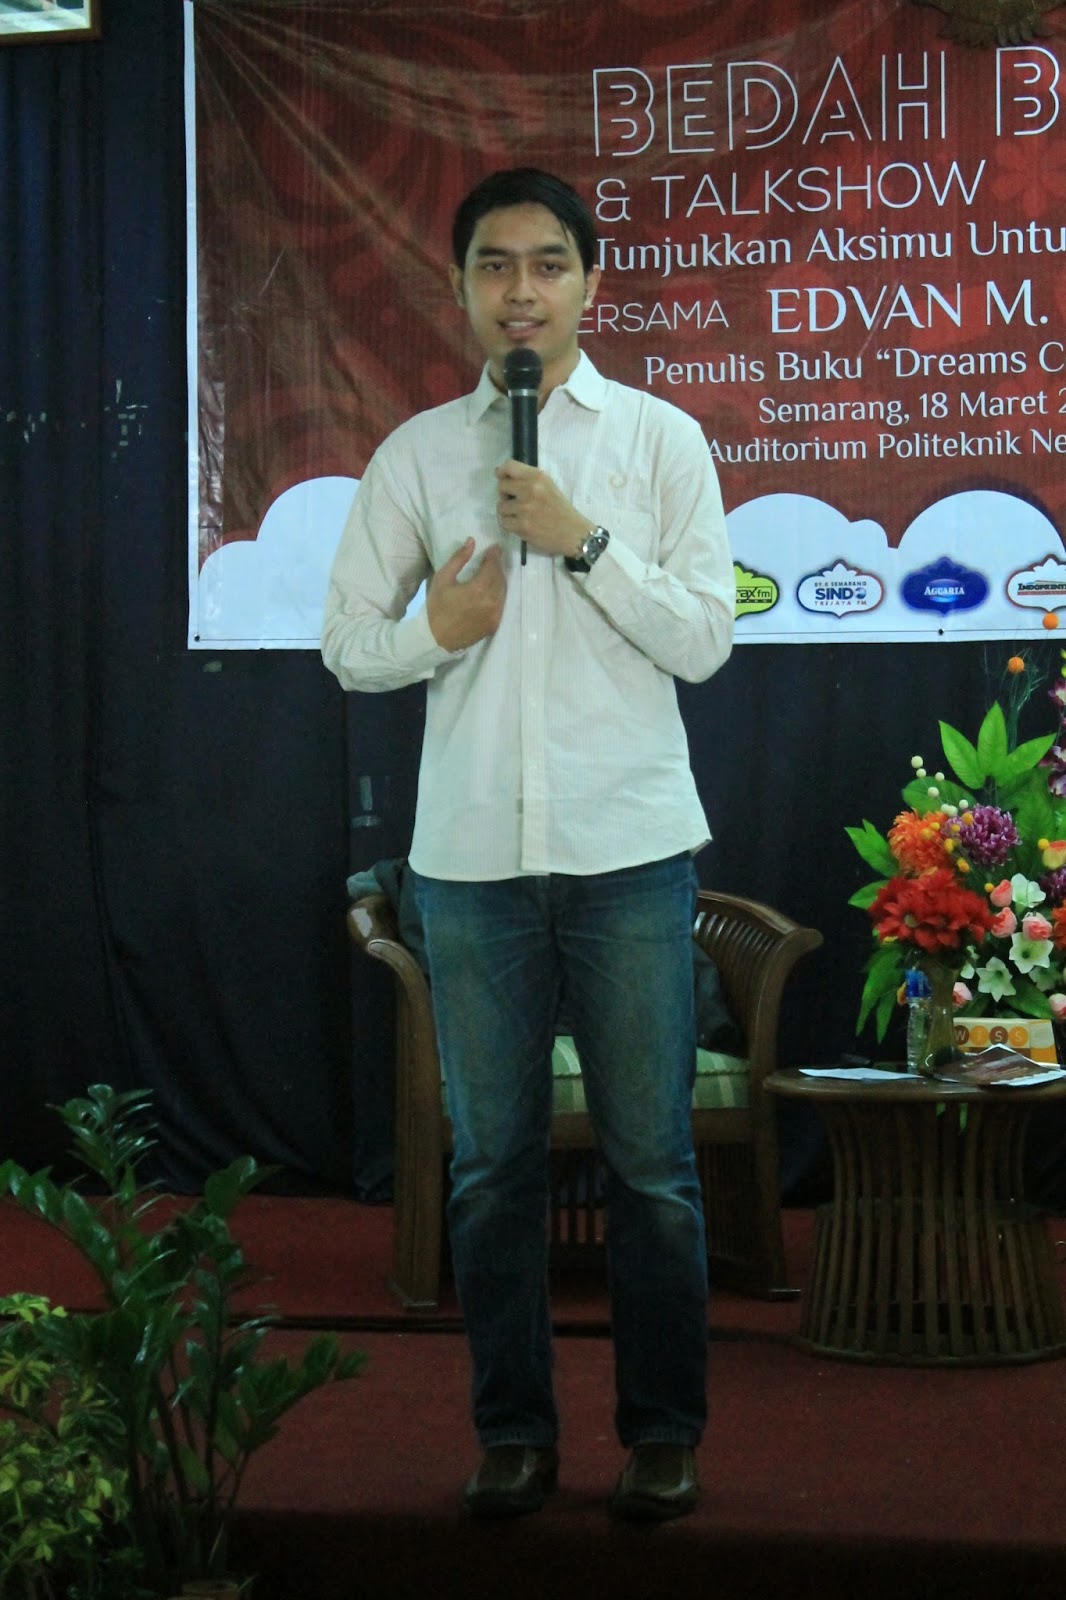 Edvan M Kautsar Motivator Muda Indonesia, Penulis 